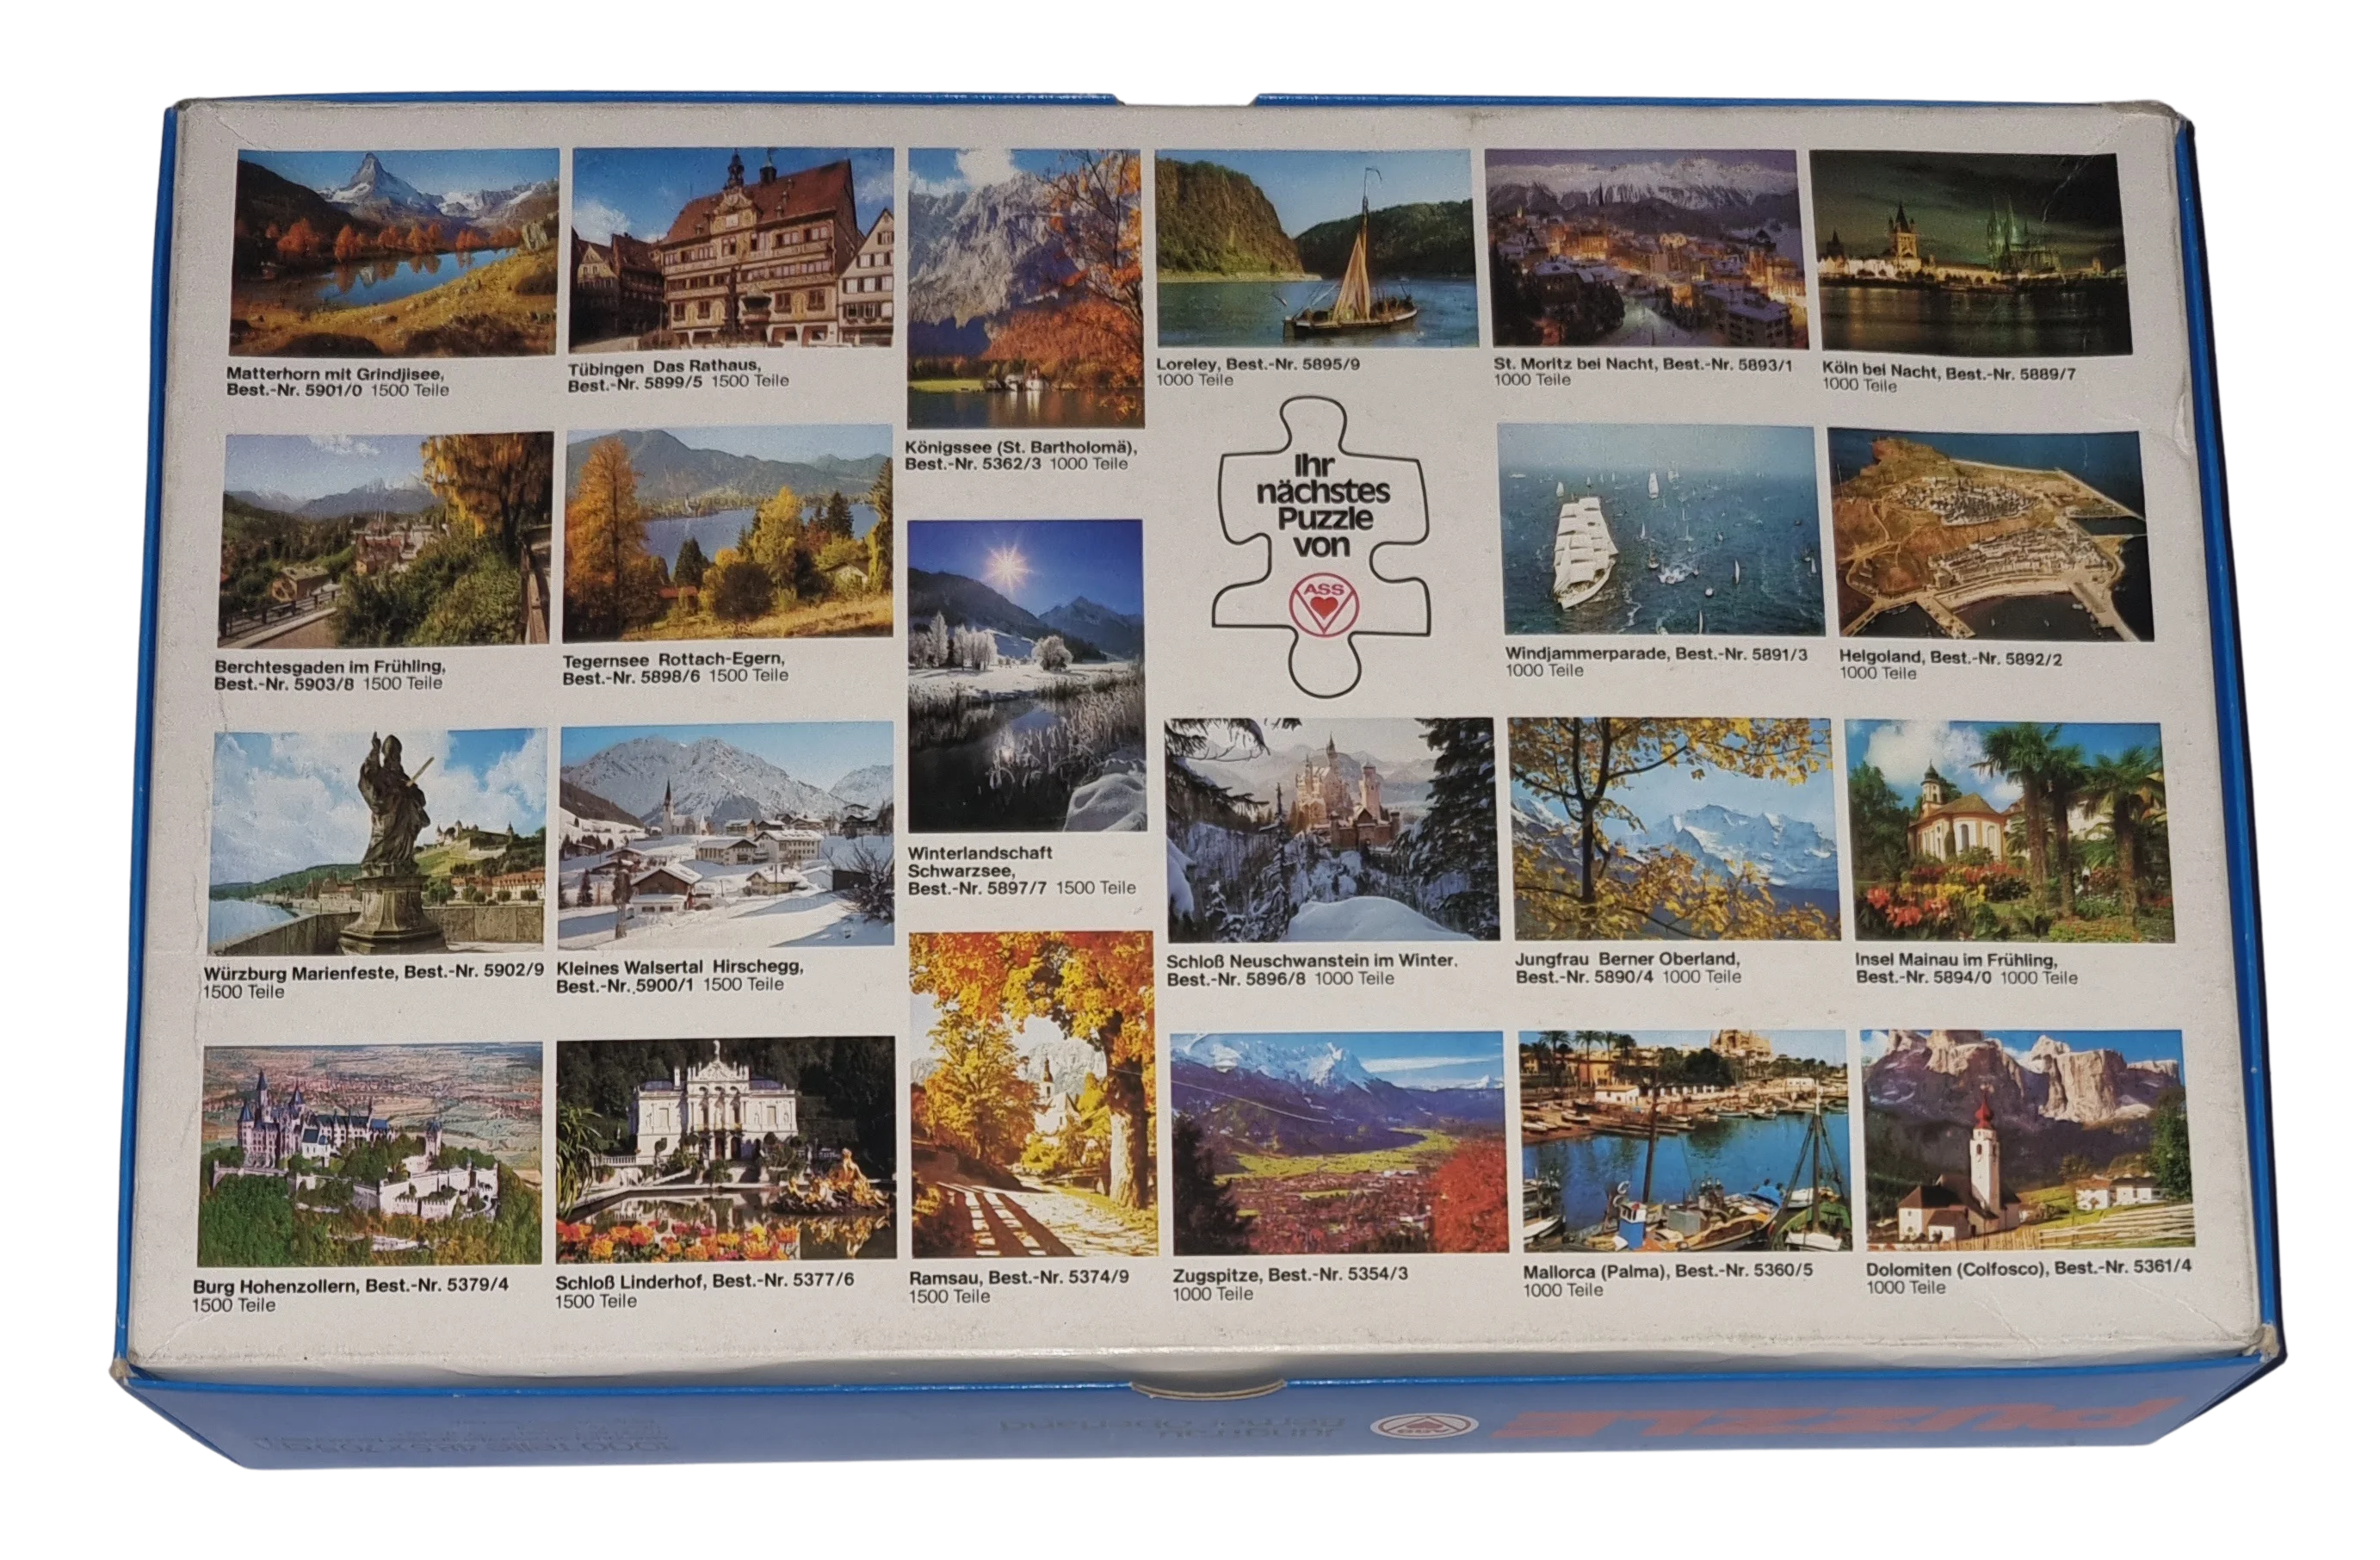 ASS Puzzle 1000 Teile Jungfrau Berner Oberland 5890/4